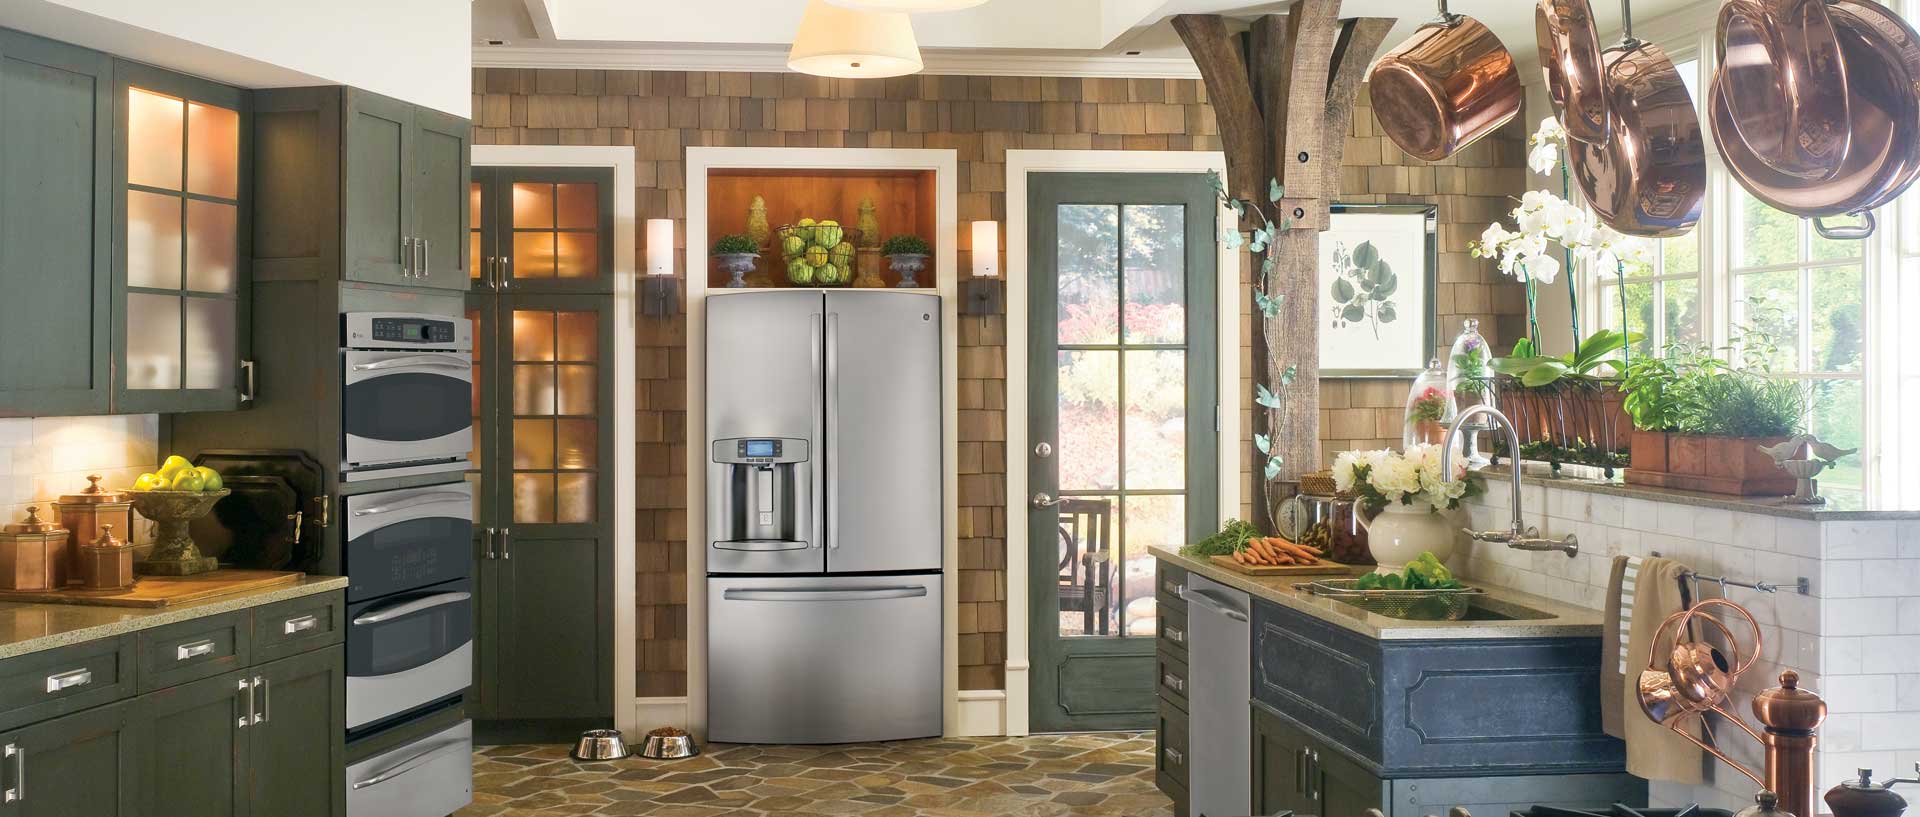 GE FrenchDoor Refrigerators Consumer Reports